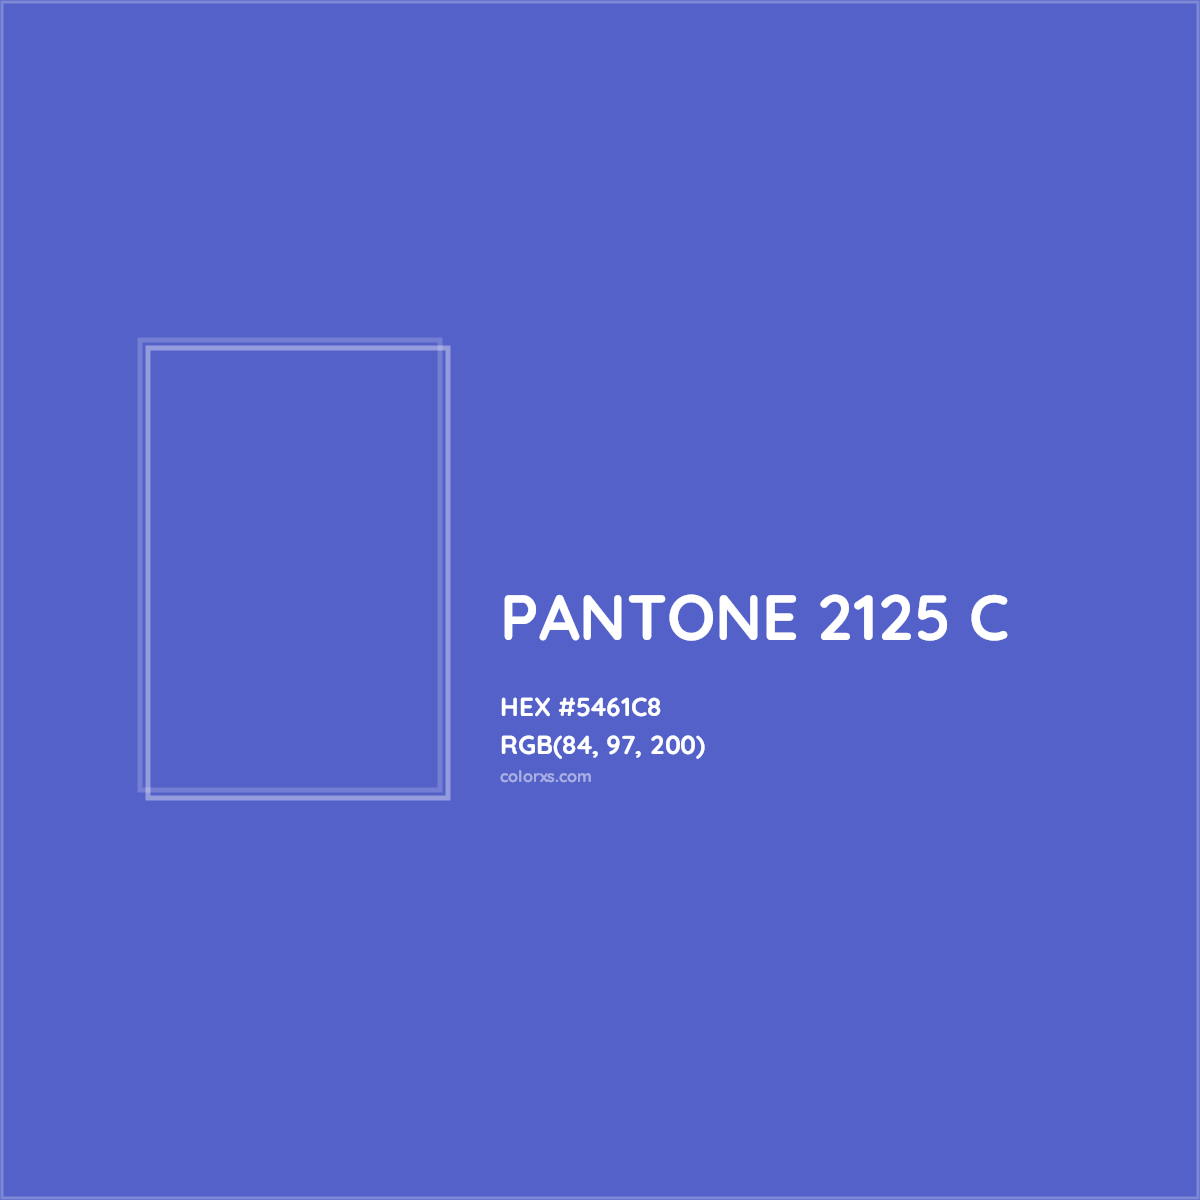 HEX #5461C8 PANTONE 2125 C CMS Pantone PMS - Color Code